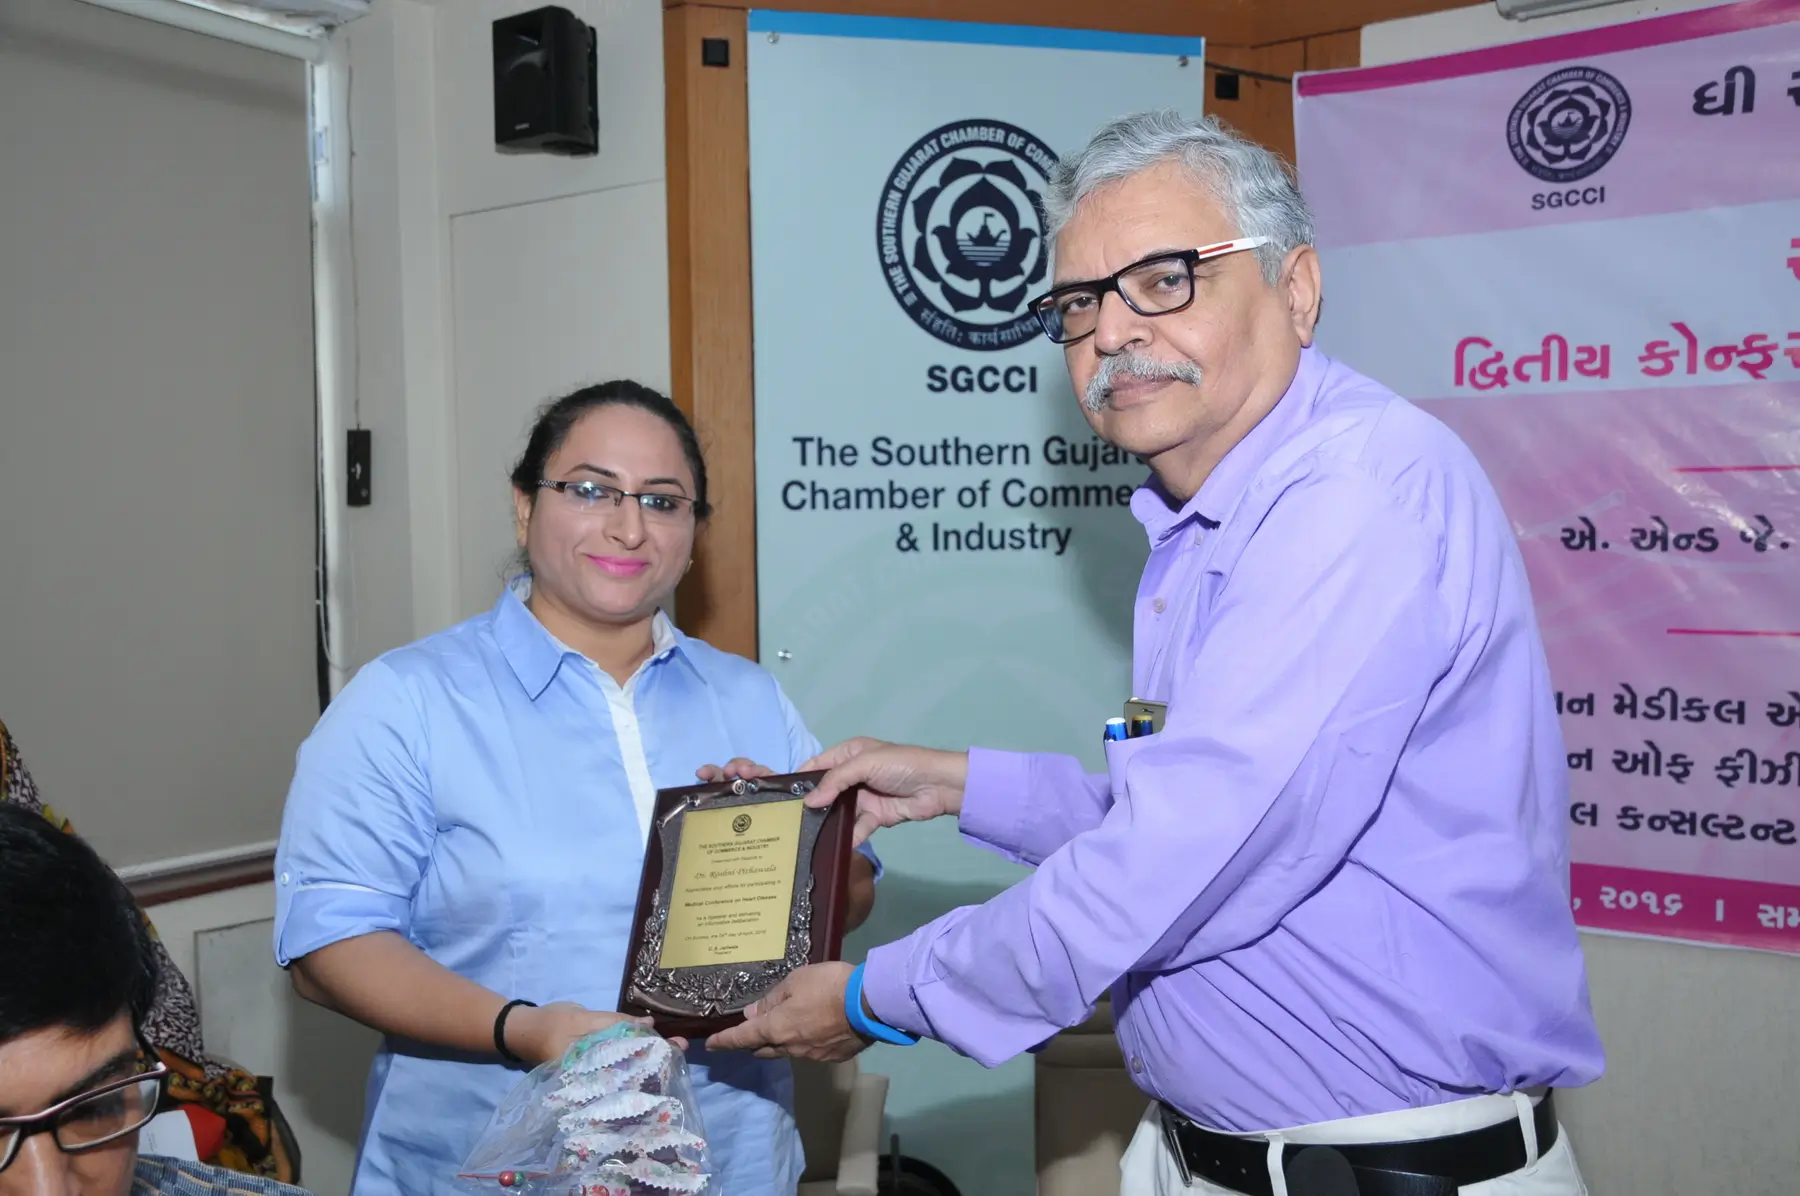 Achievement of Dietitian Roshni Pithawala